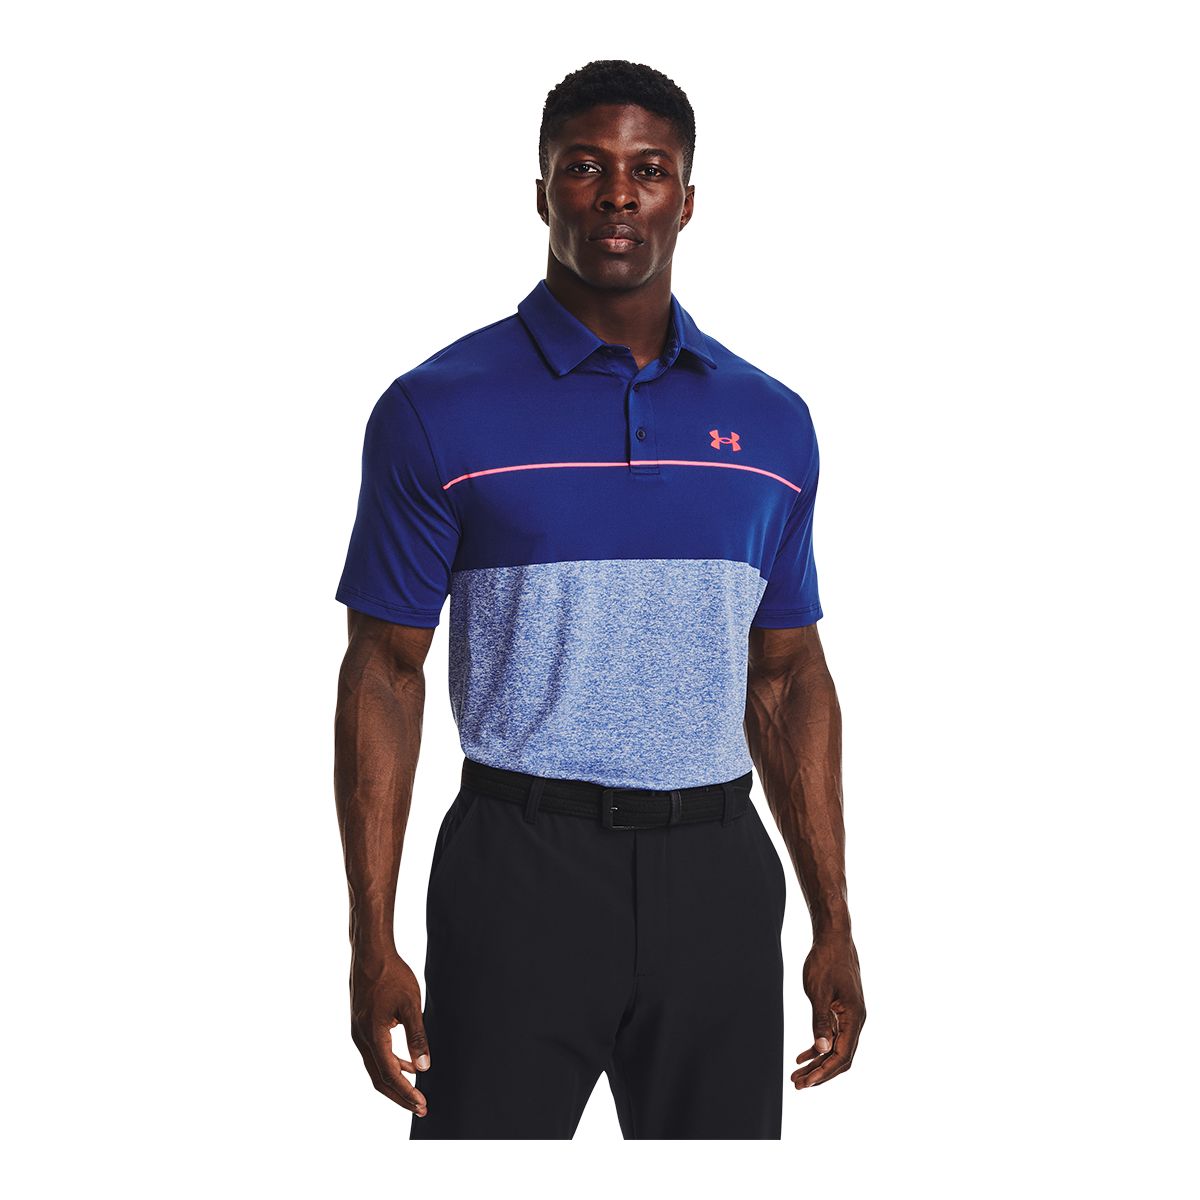 Sport Skort with Shorts Underneath, Golf Apparel